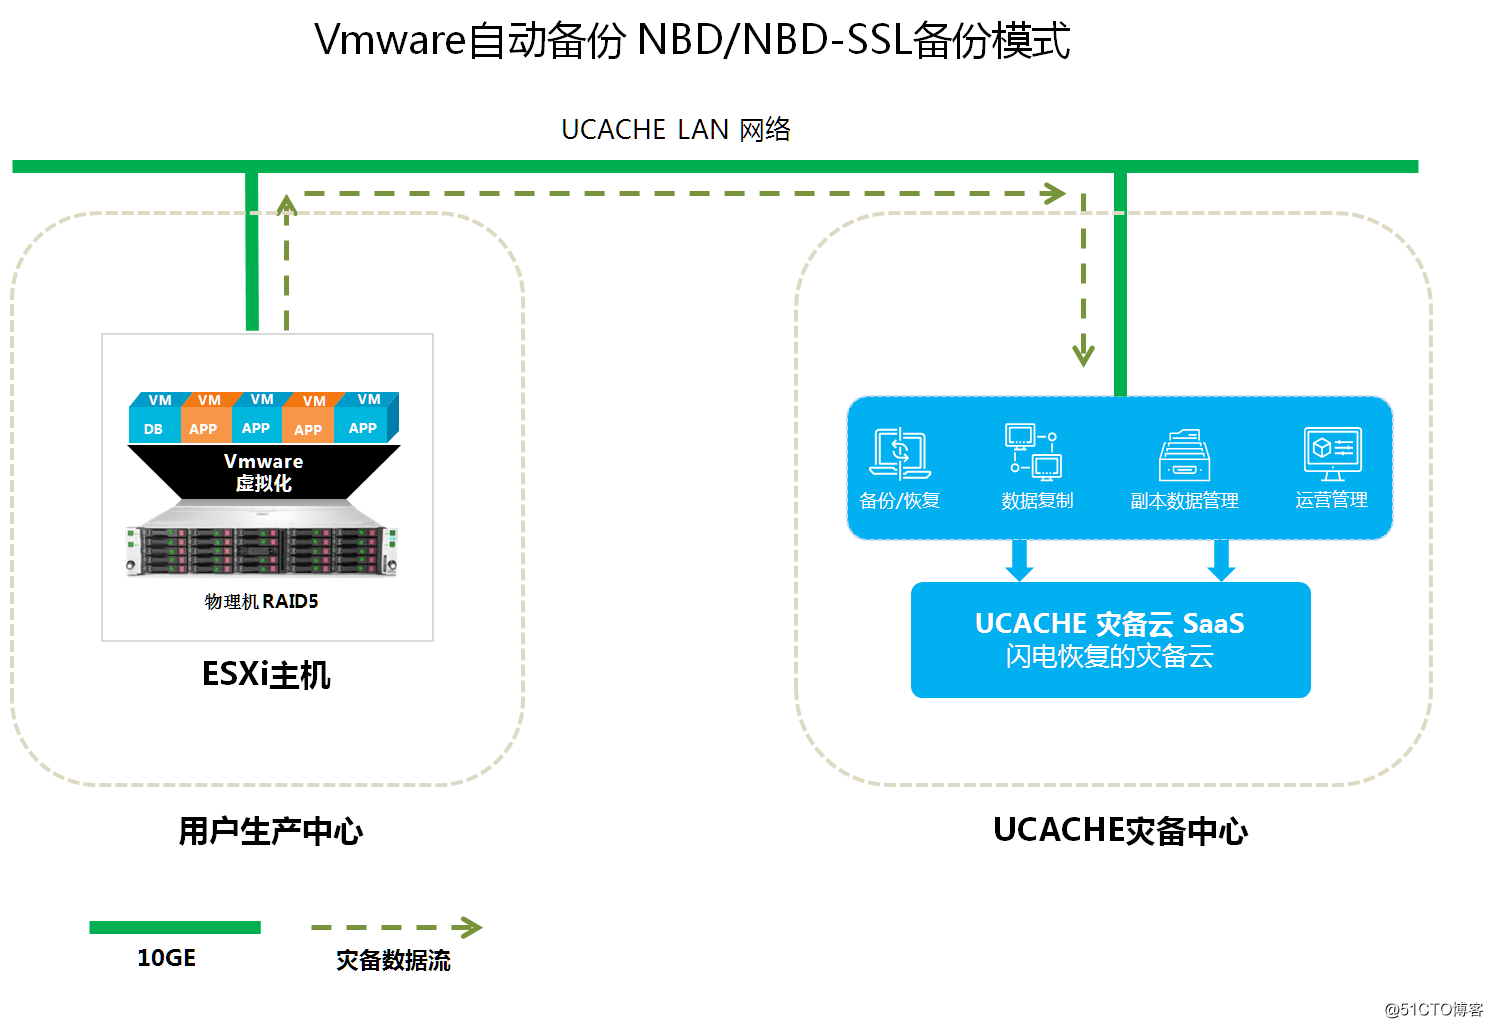 VMware虚拟化平台备份与恢复